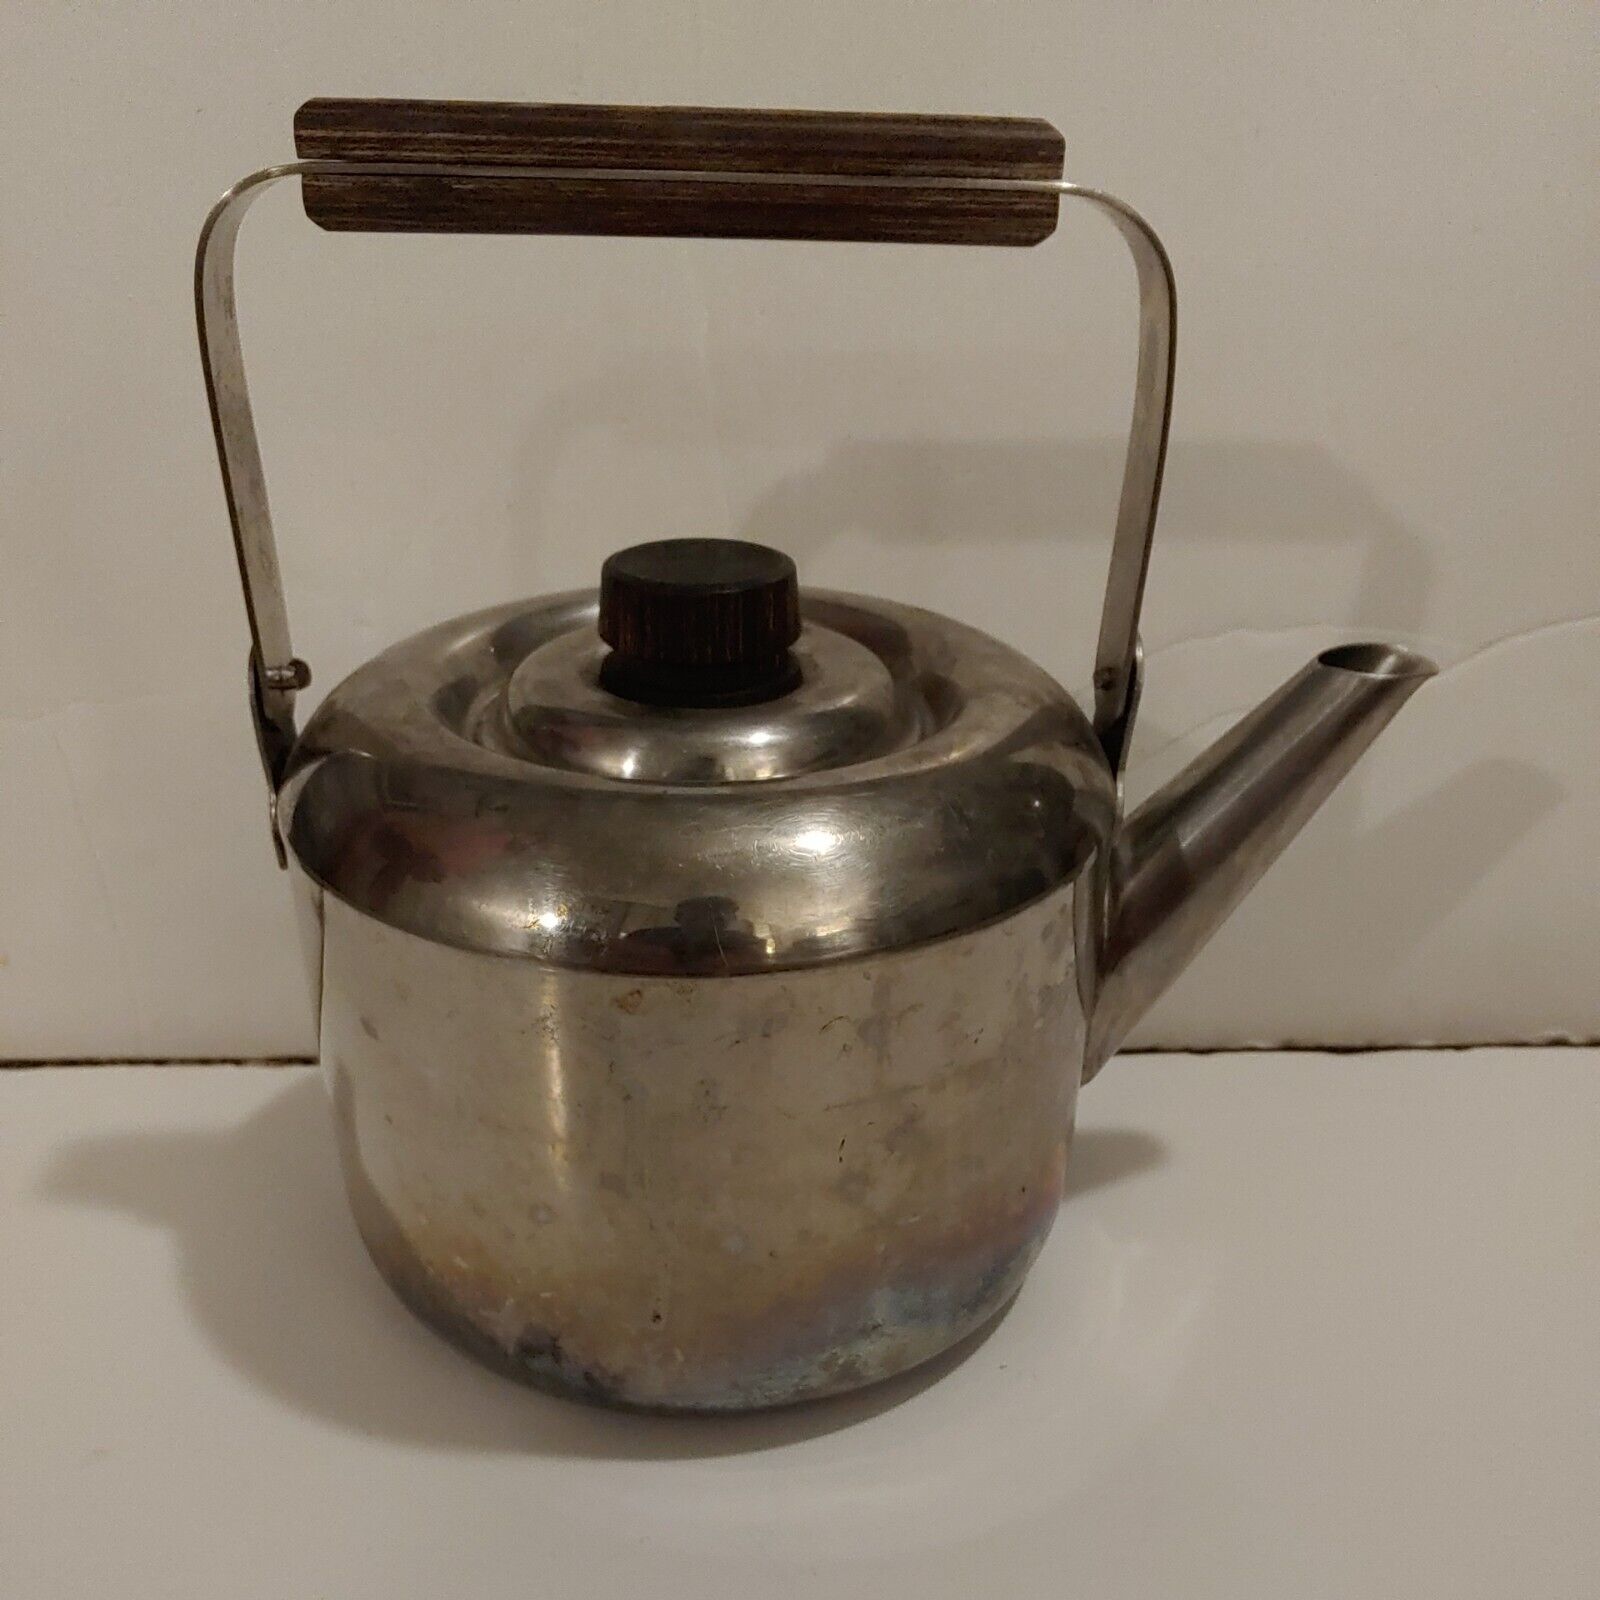 B4 Ken Carter Cooktime Stainless Steel 2 Quart Tea Kettle Wood Handle 5022 Cook